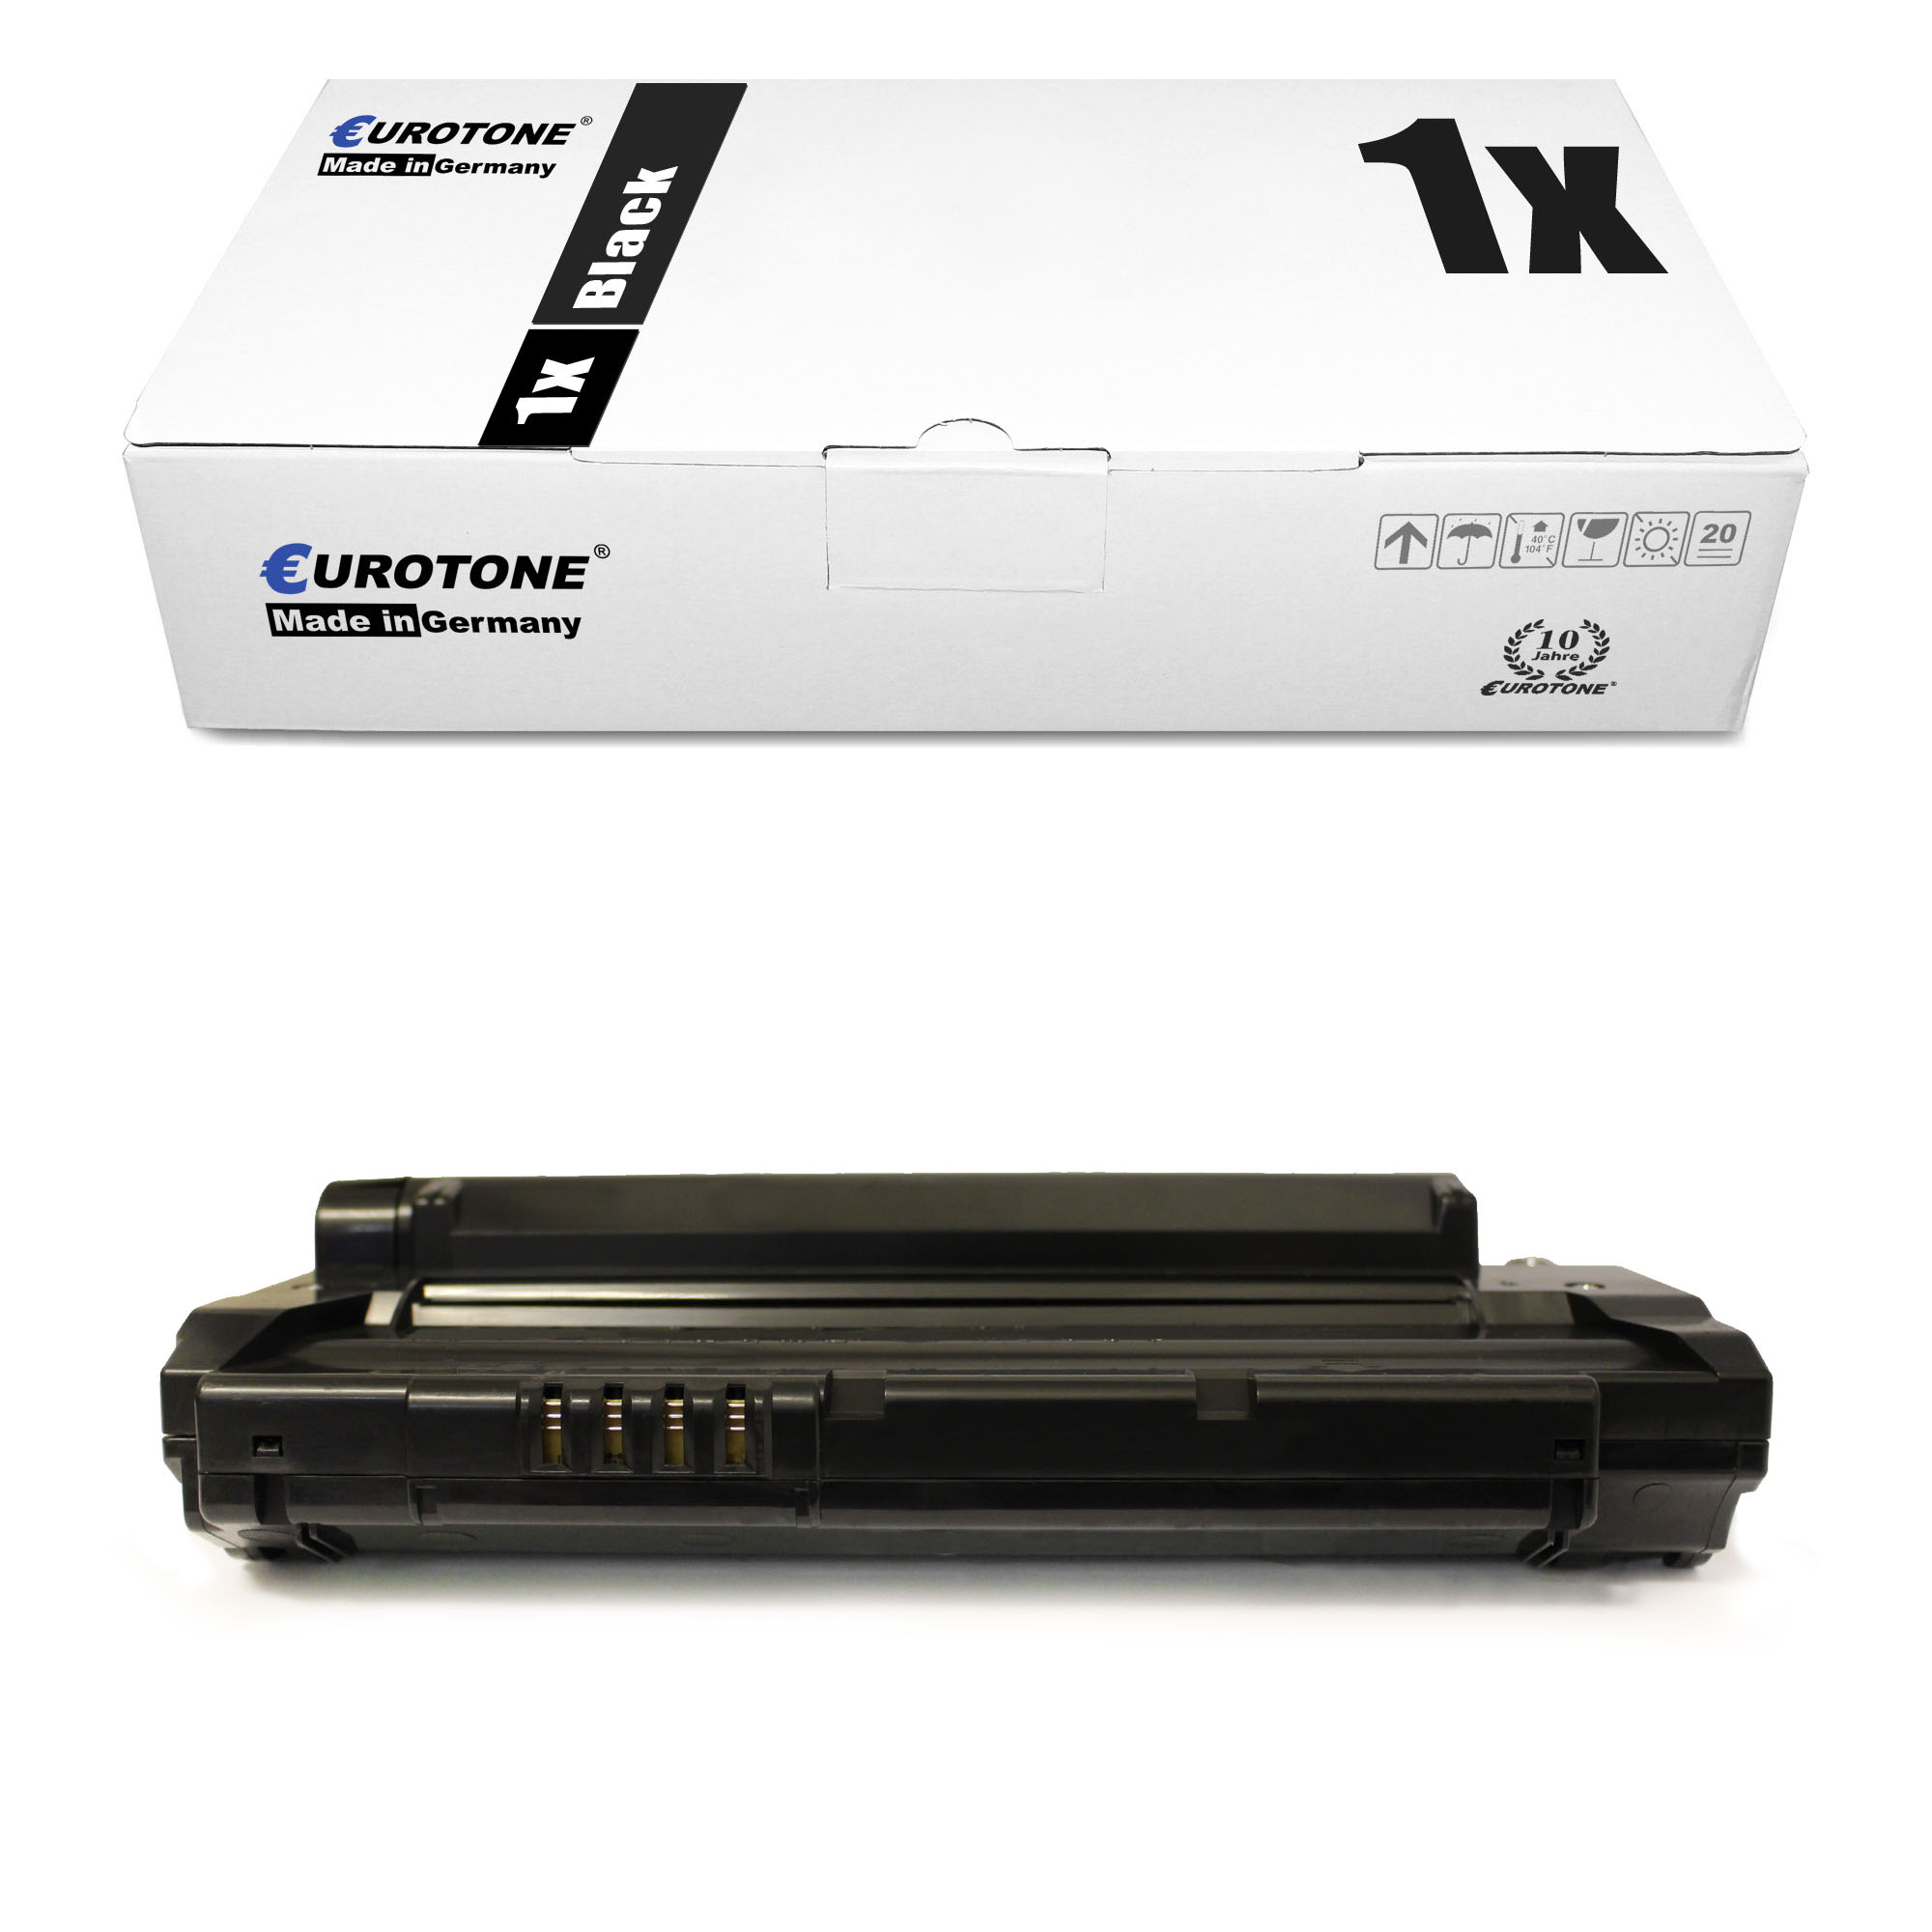 EUROTONE SCX-4300 1xBK Toner Cartridge MLT-D1092S) Schwarz (Samsung